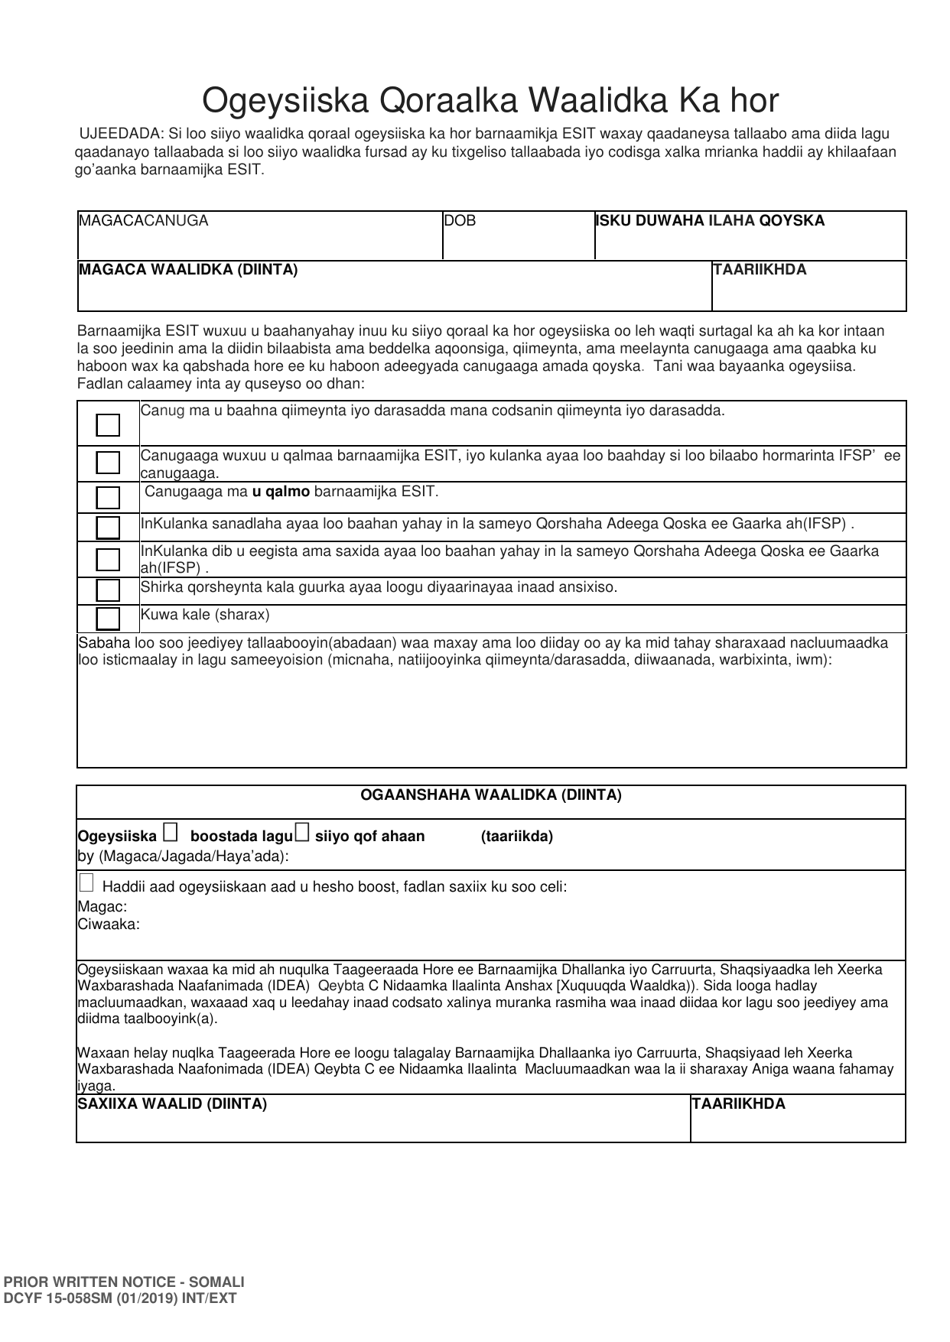 DCYF Form 15-058 Parent Prior Written Notice - Washington (Somali), Page 1